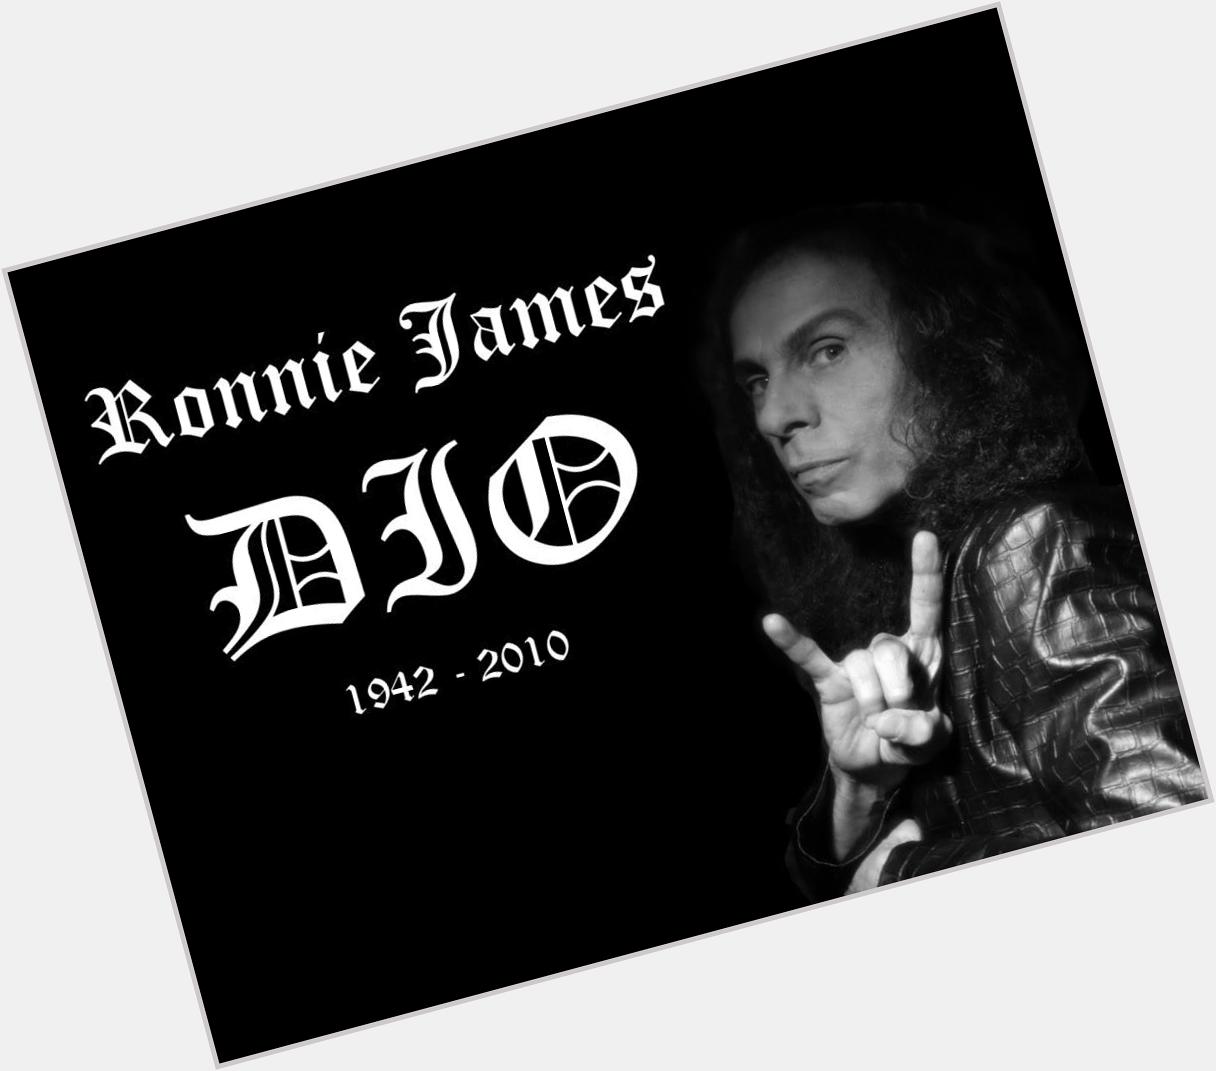 Happy birthday to Ronnie James dio 